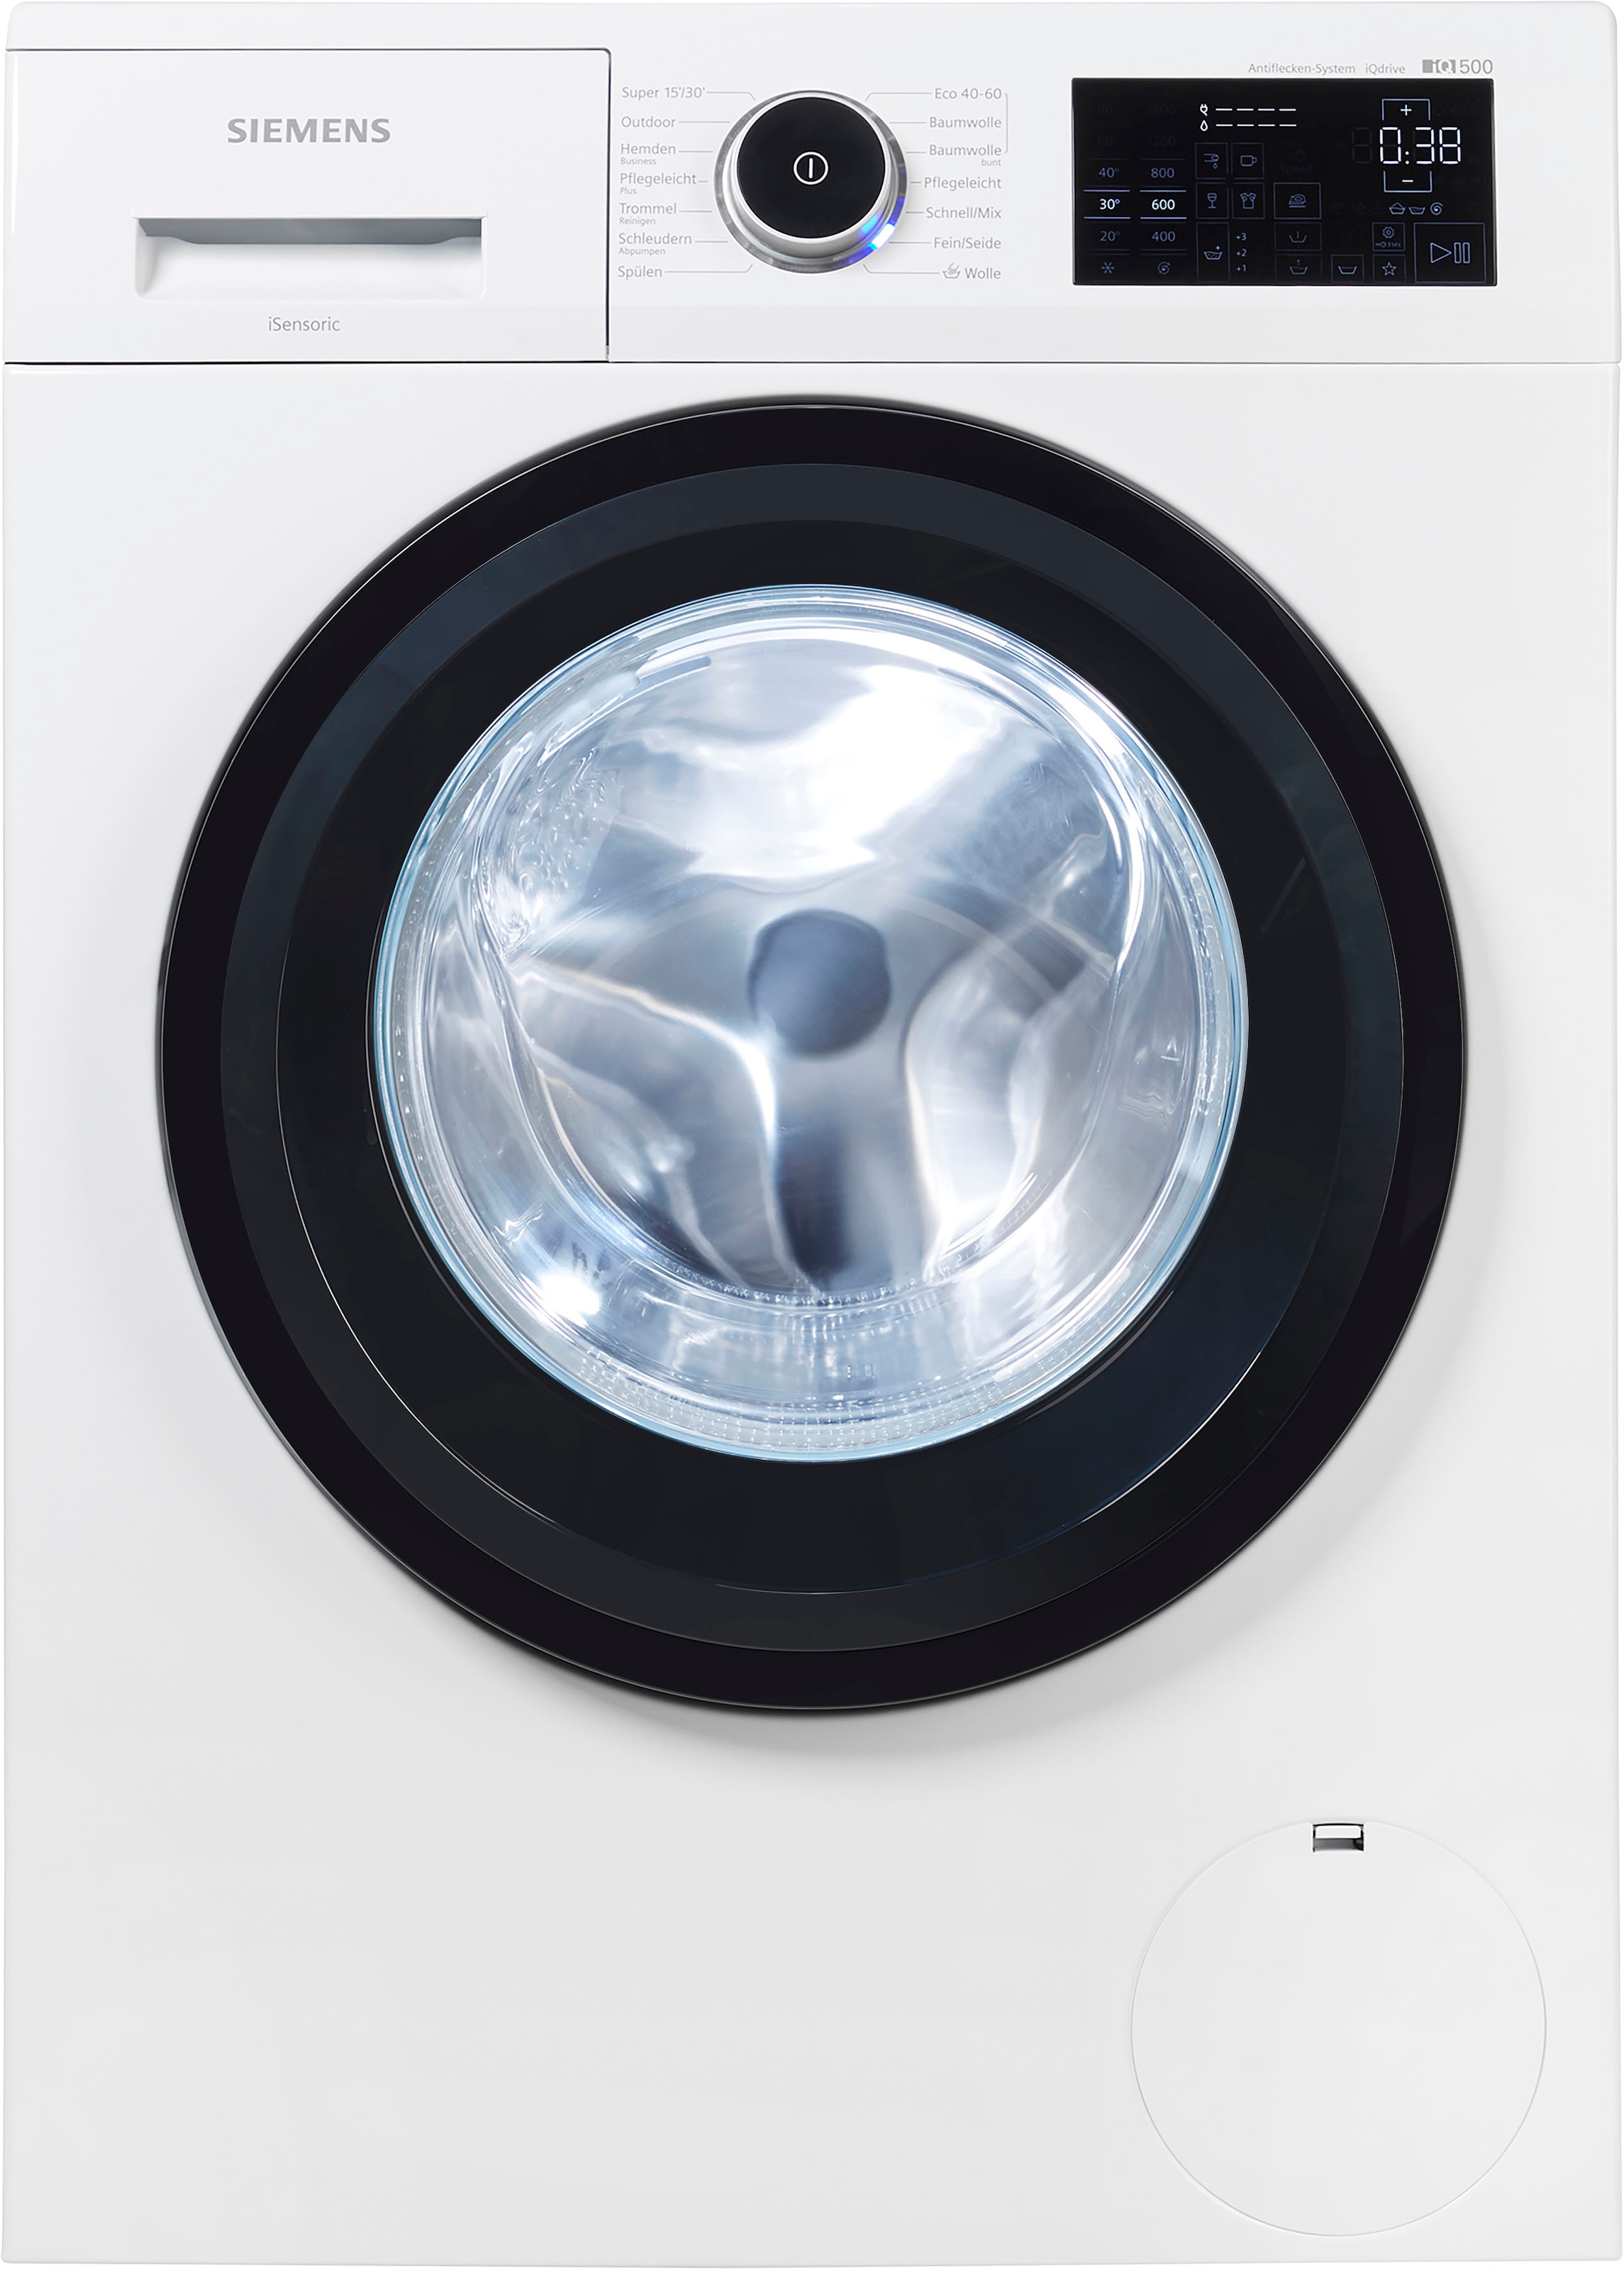 SIEMENS Waschmaschine 1400 »WM14URECO«, WM14URECO, bei kg, 9 U/min iQ500, OTTO